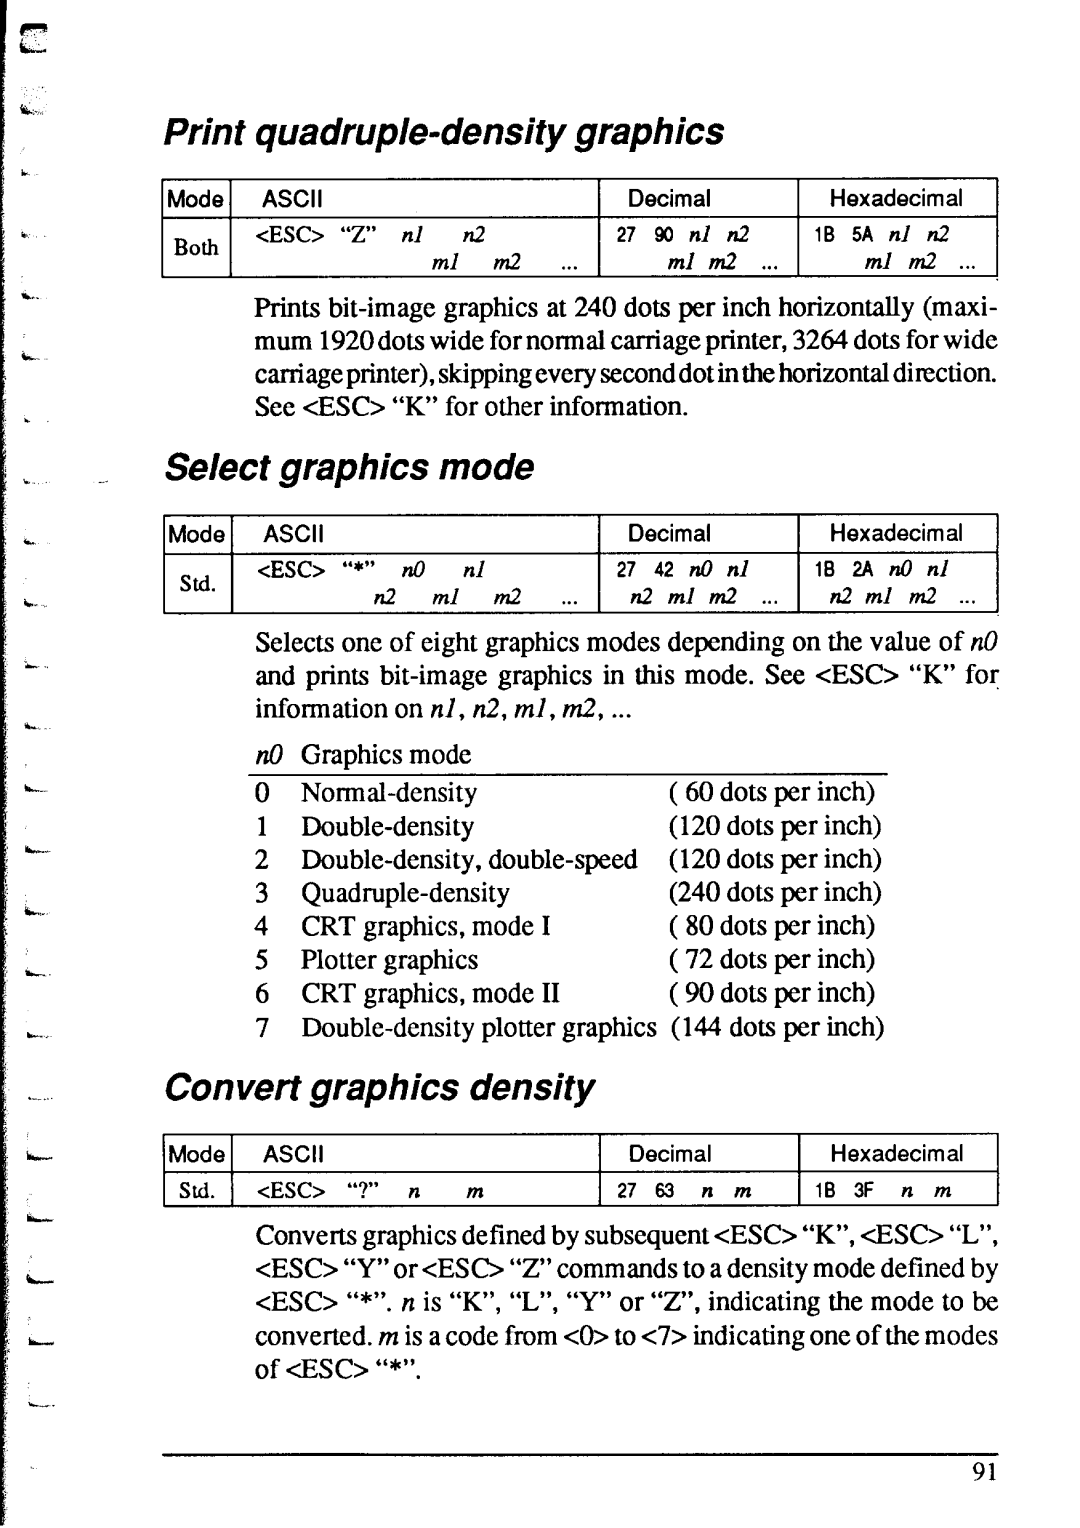 Star Micronics XR-1520, XR-1020 manual Print quadruple-densitygraphics, i . Select graphics mode, Convert graphics density 